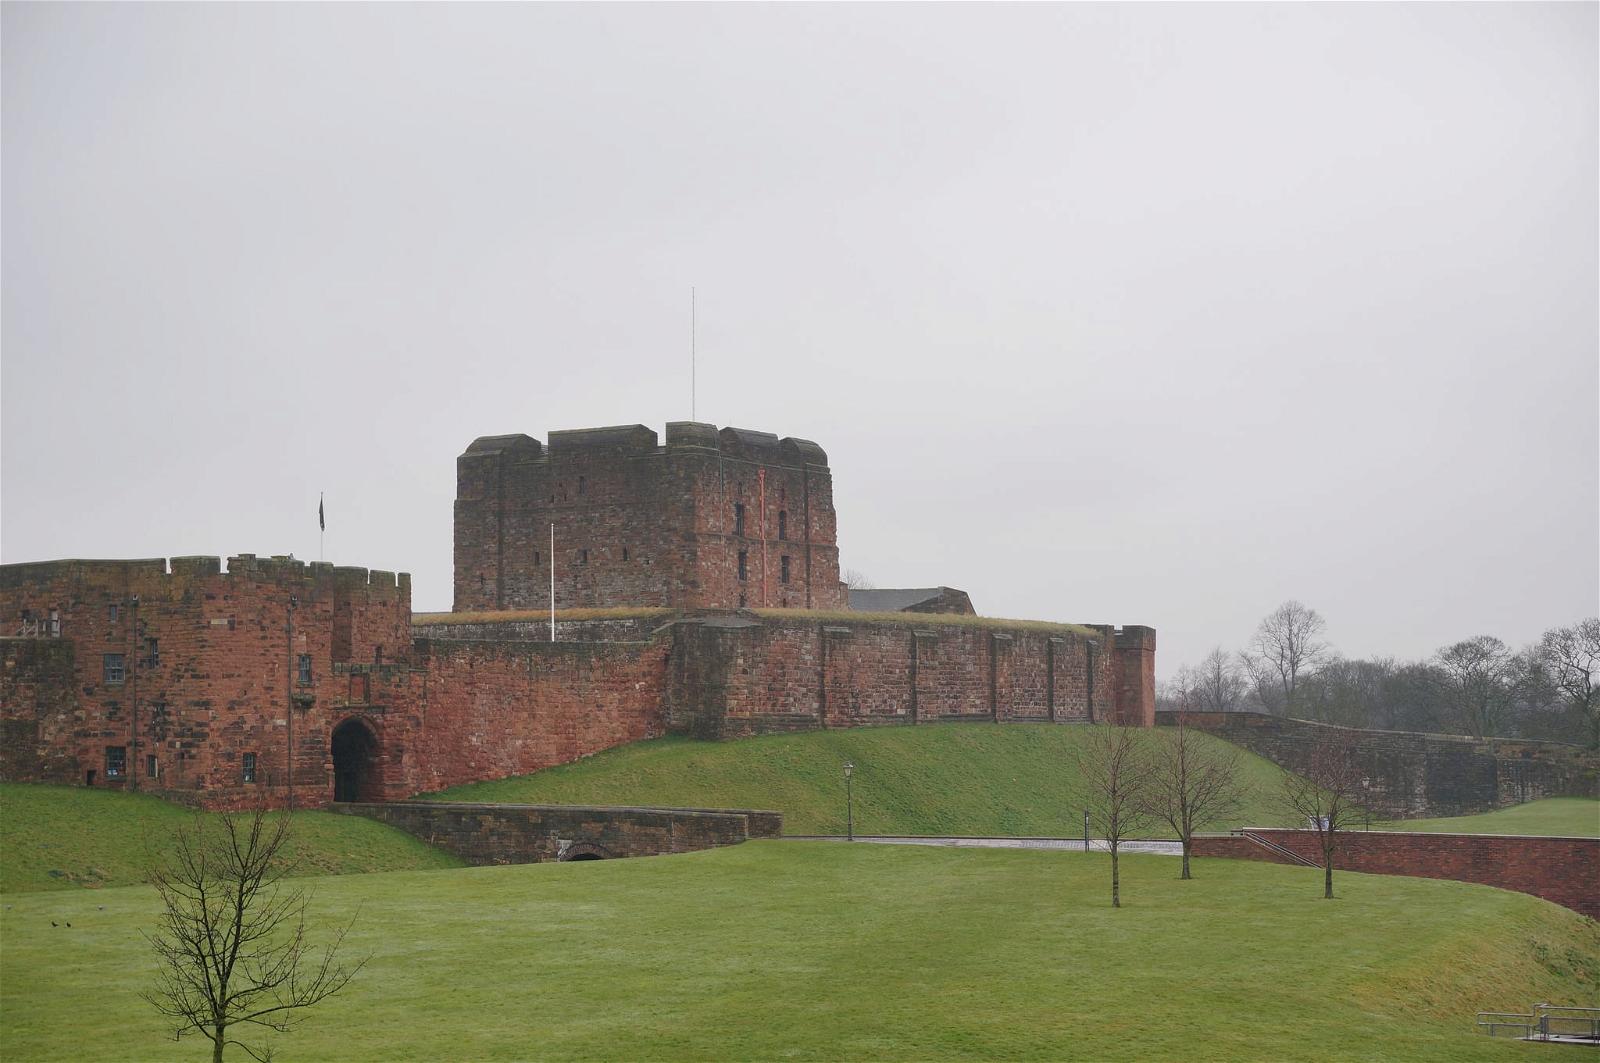 Immagine di Carlisle Castle. castle carlisle file:md5sum=908c8bc5047d86c9d51cb7e162e7d1b4 file:sha1sig=beb354c67860ebbfa863e4076d045cbb567bb0f4